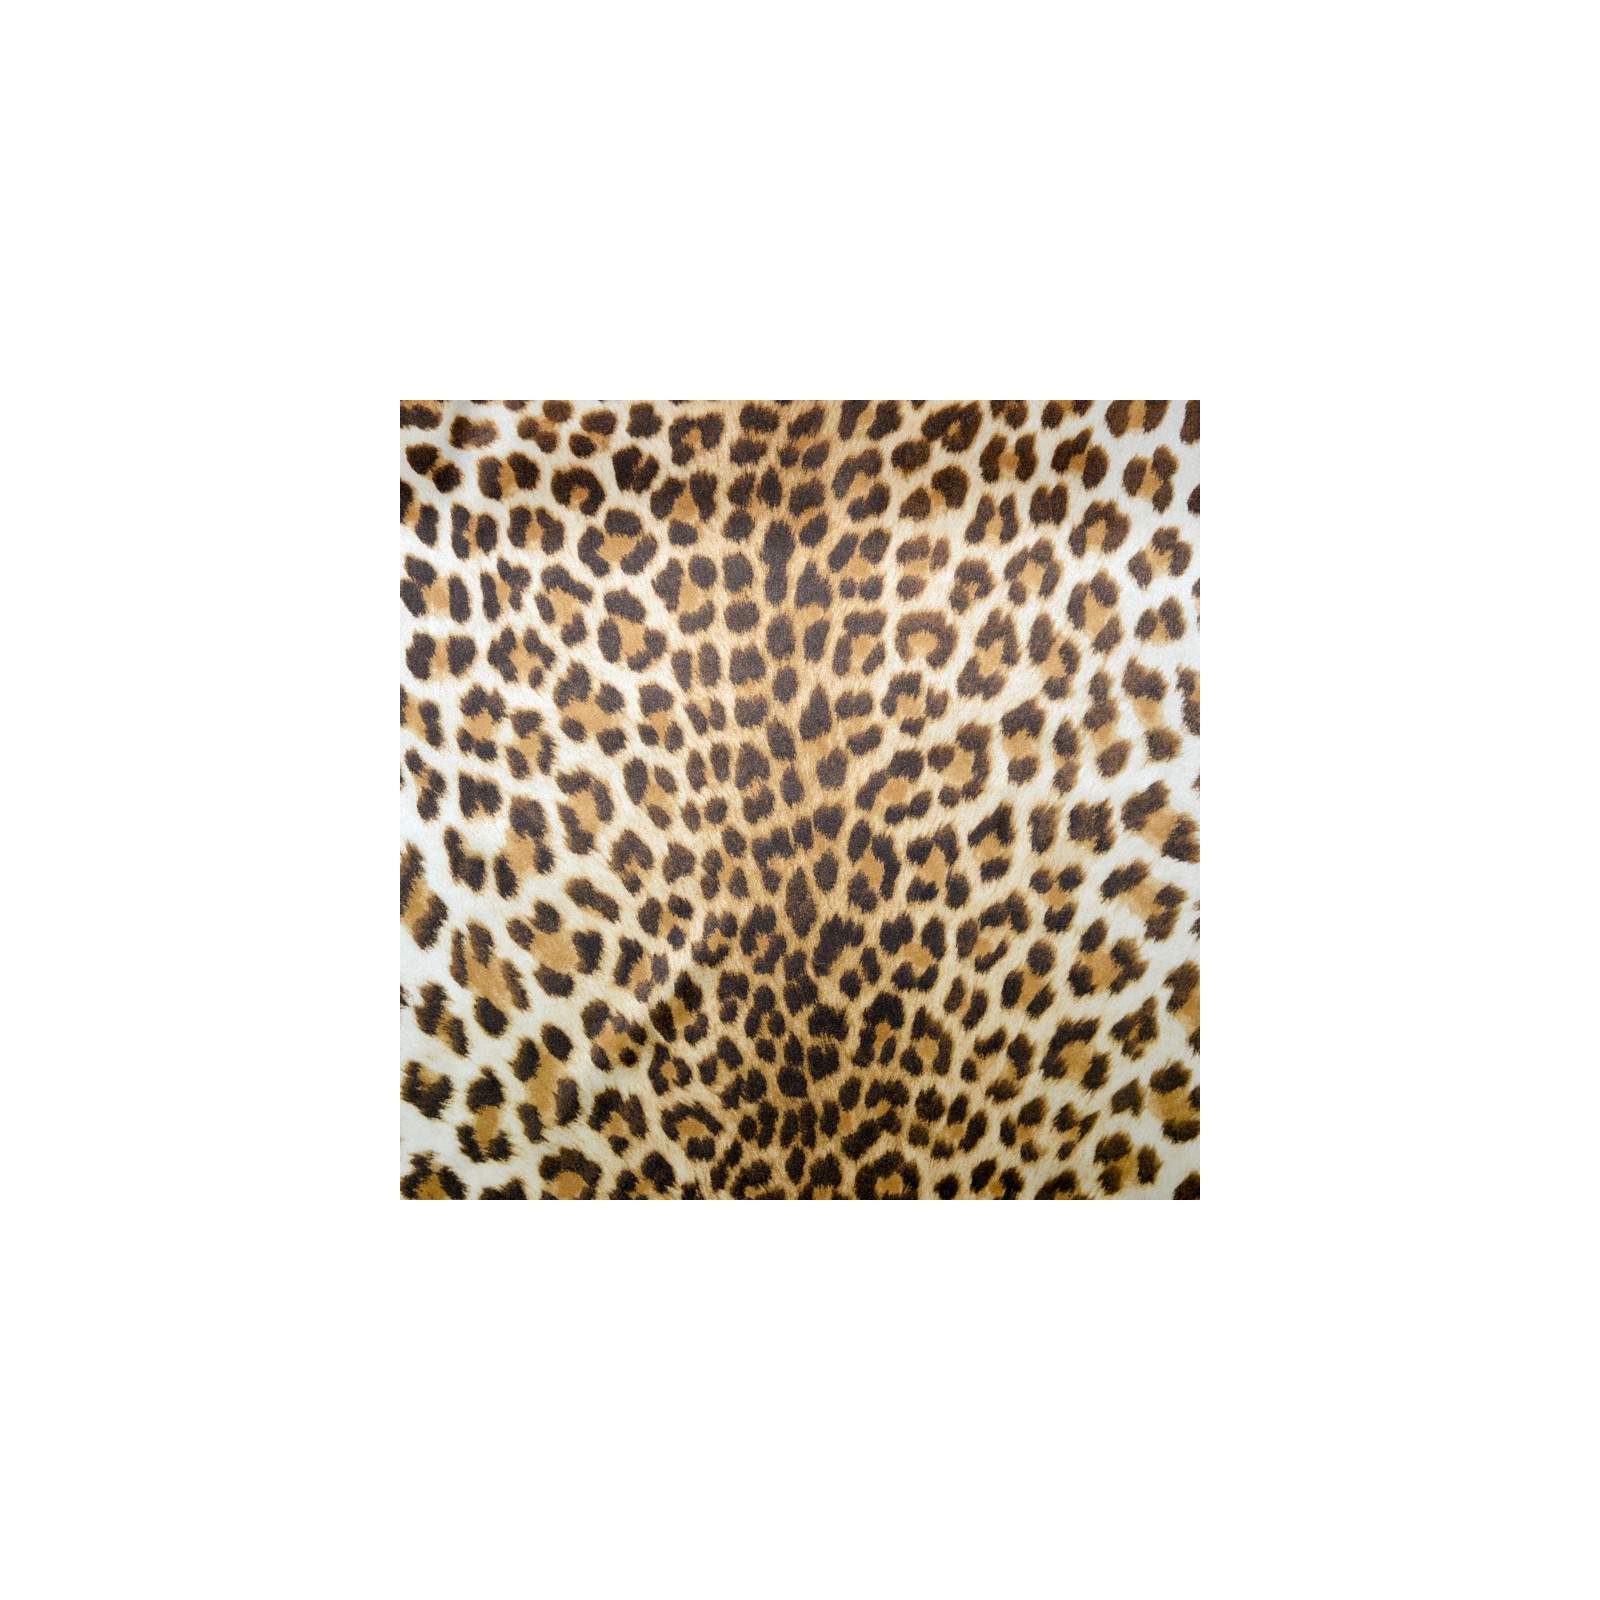 Tissu Satin de Soie imprimé léopard marron